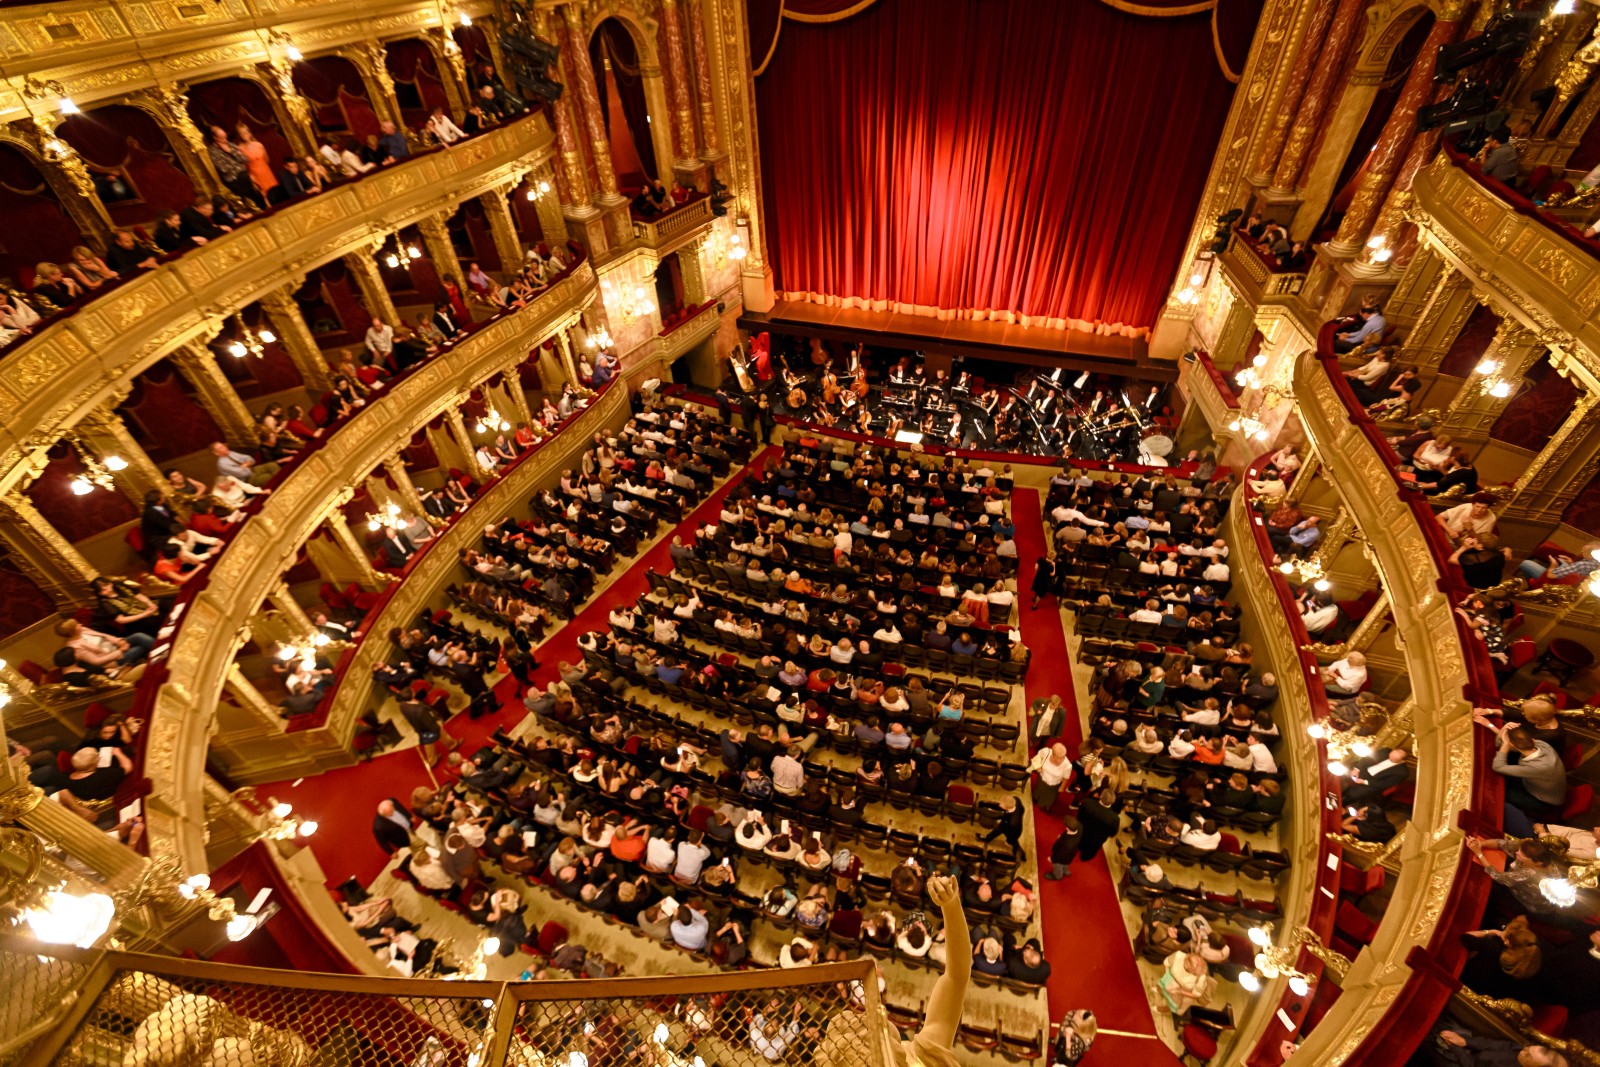 opera budapest tour tickets